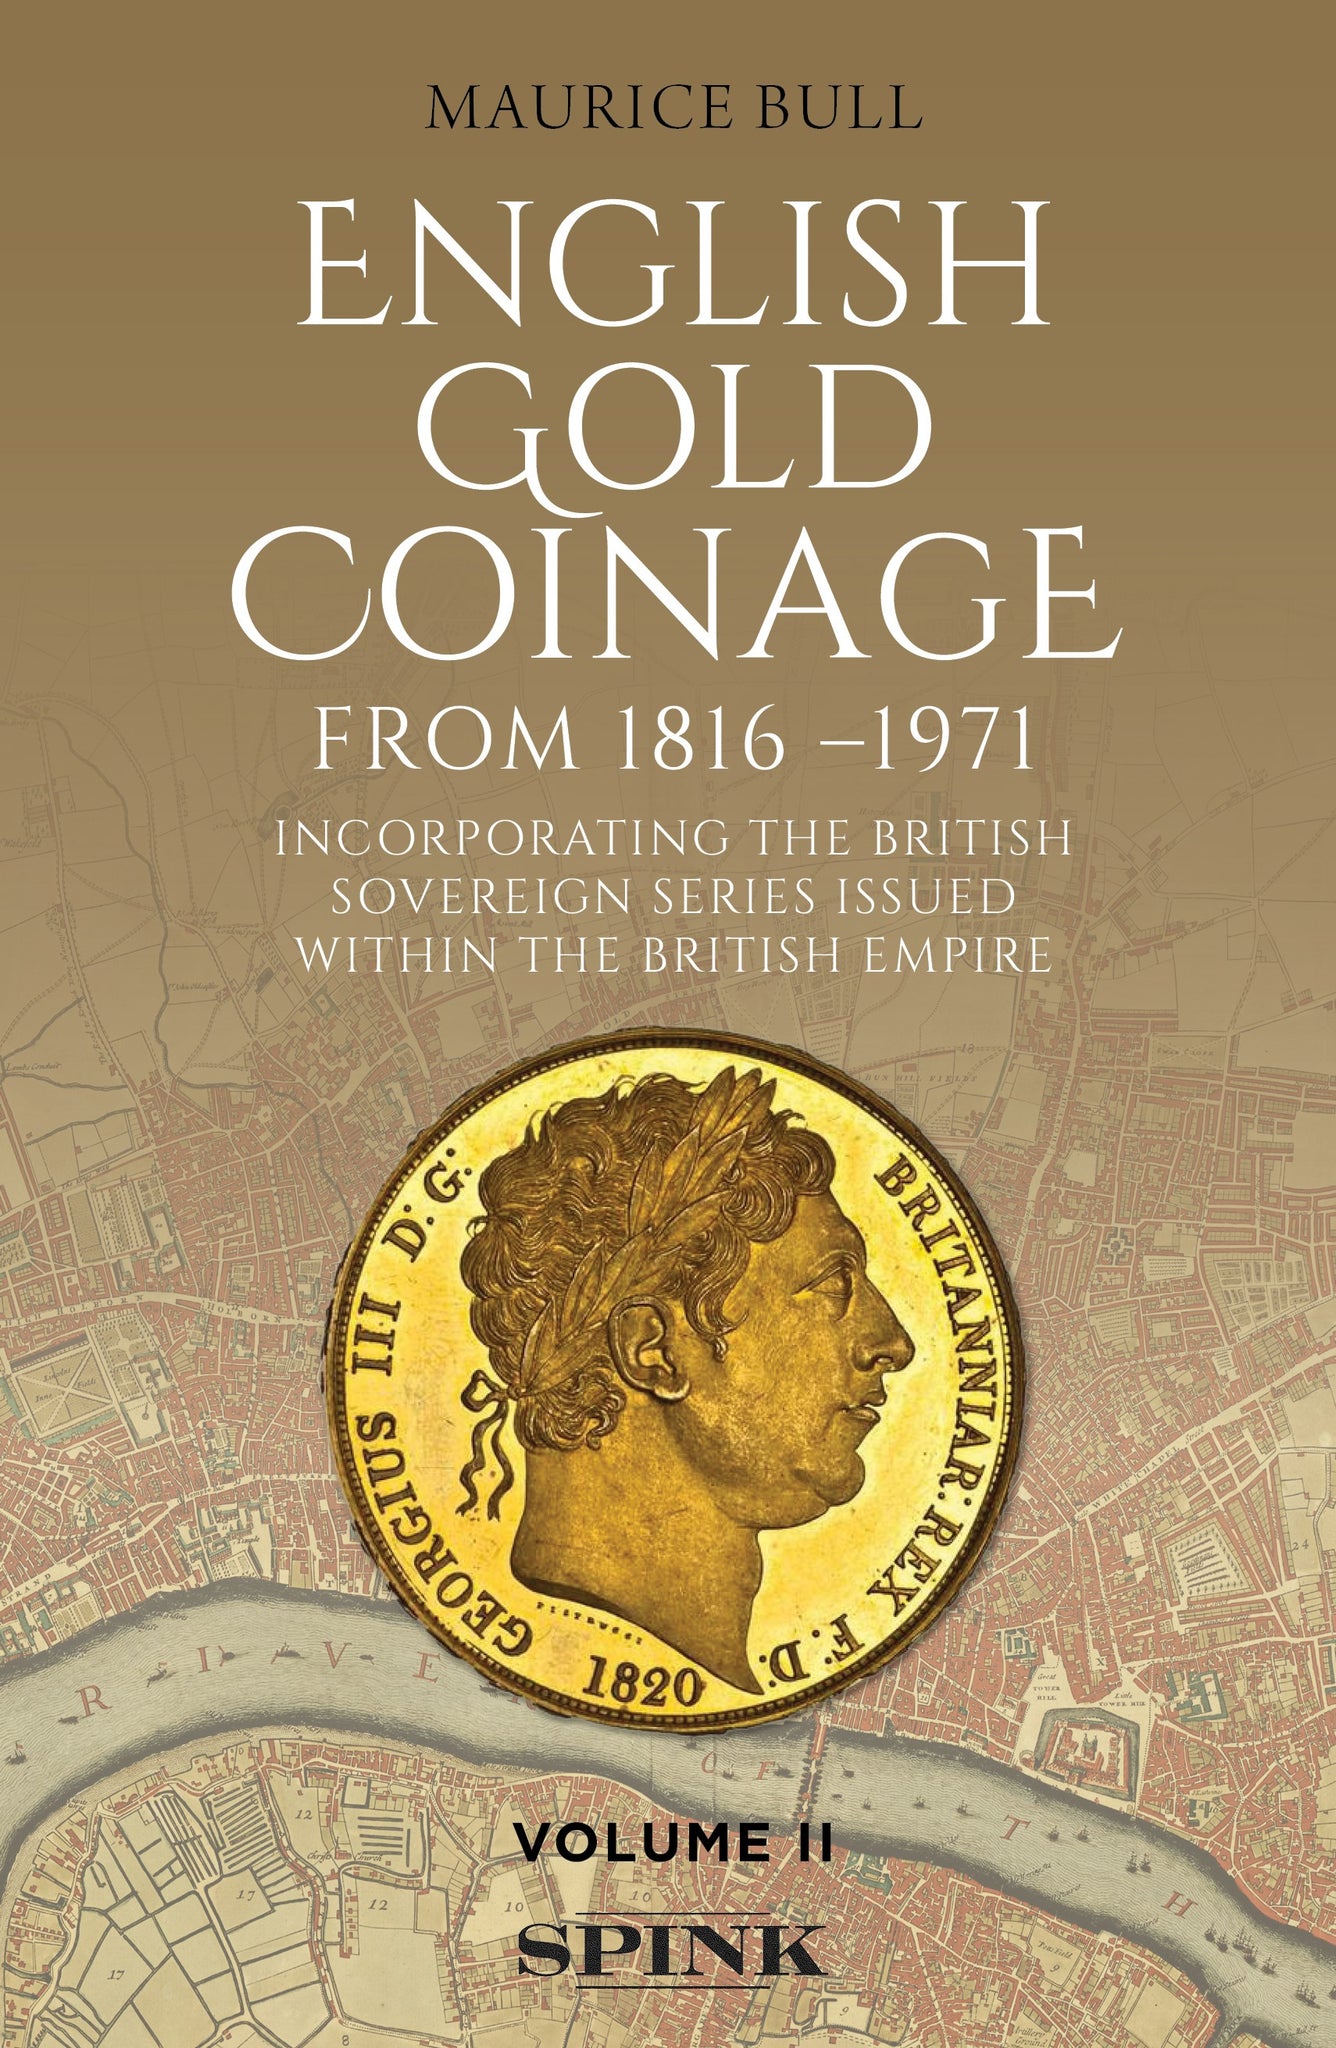 English Gold Coinage 1649-1816 Maurice Bull